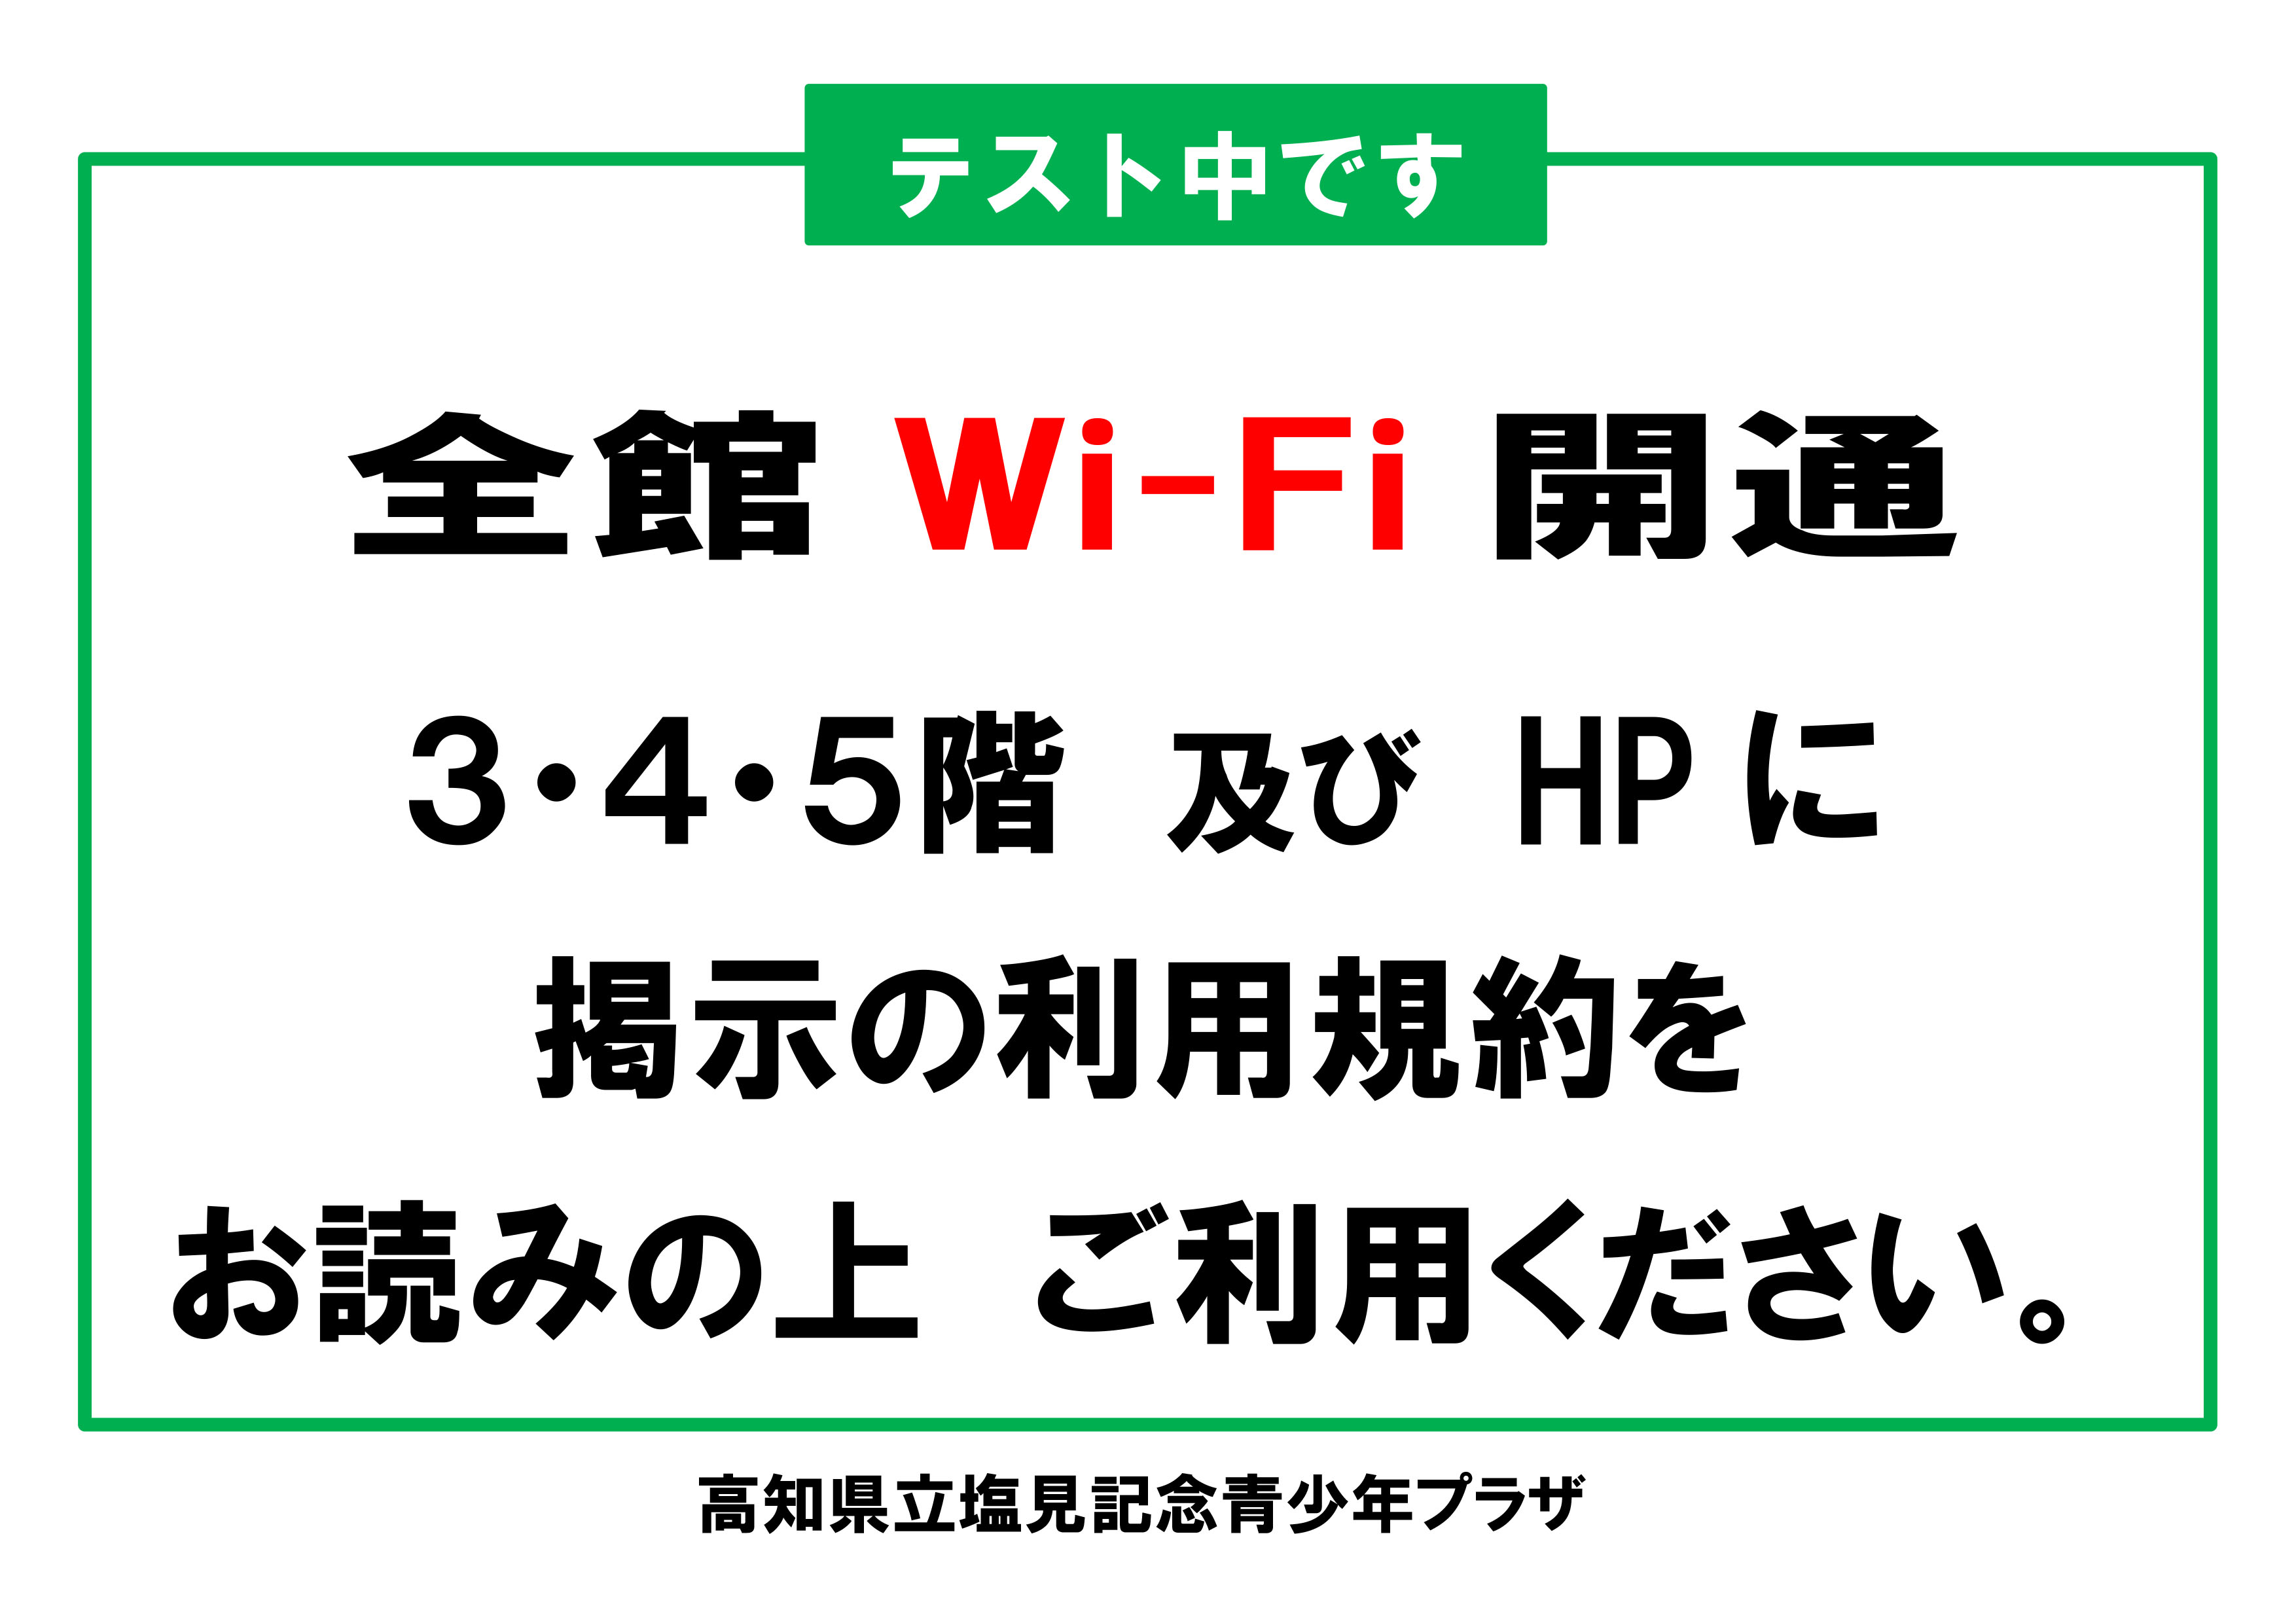 wi-fi.test.1f.jpg